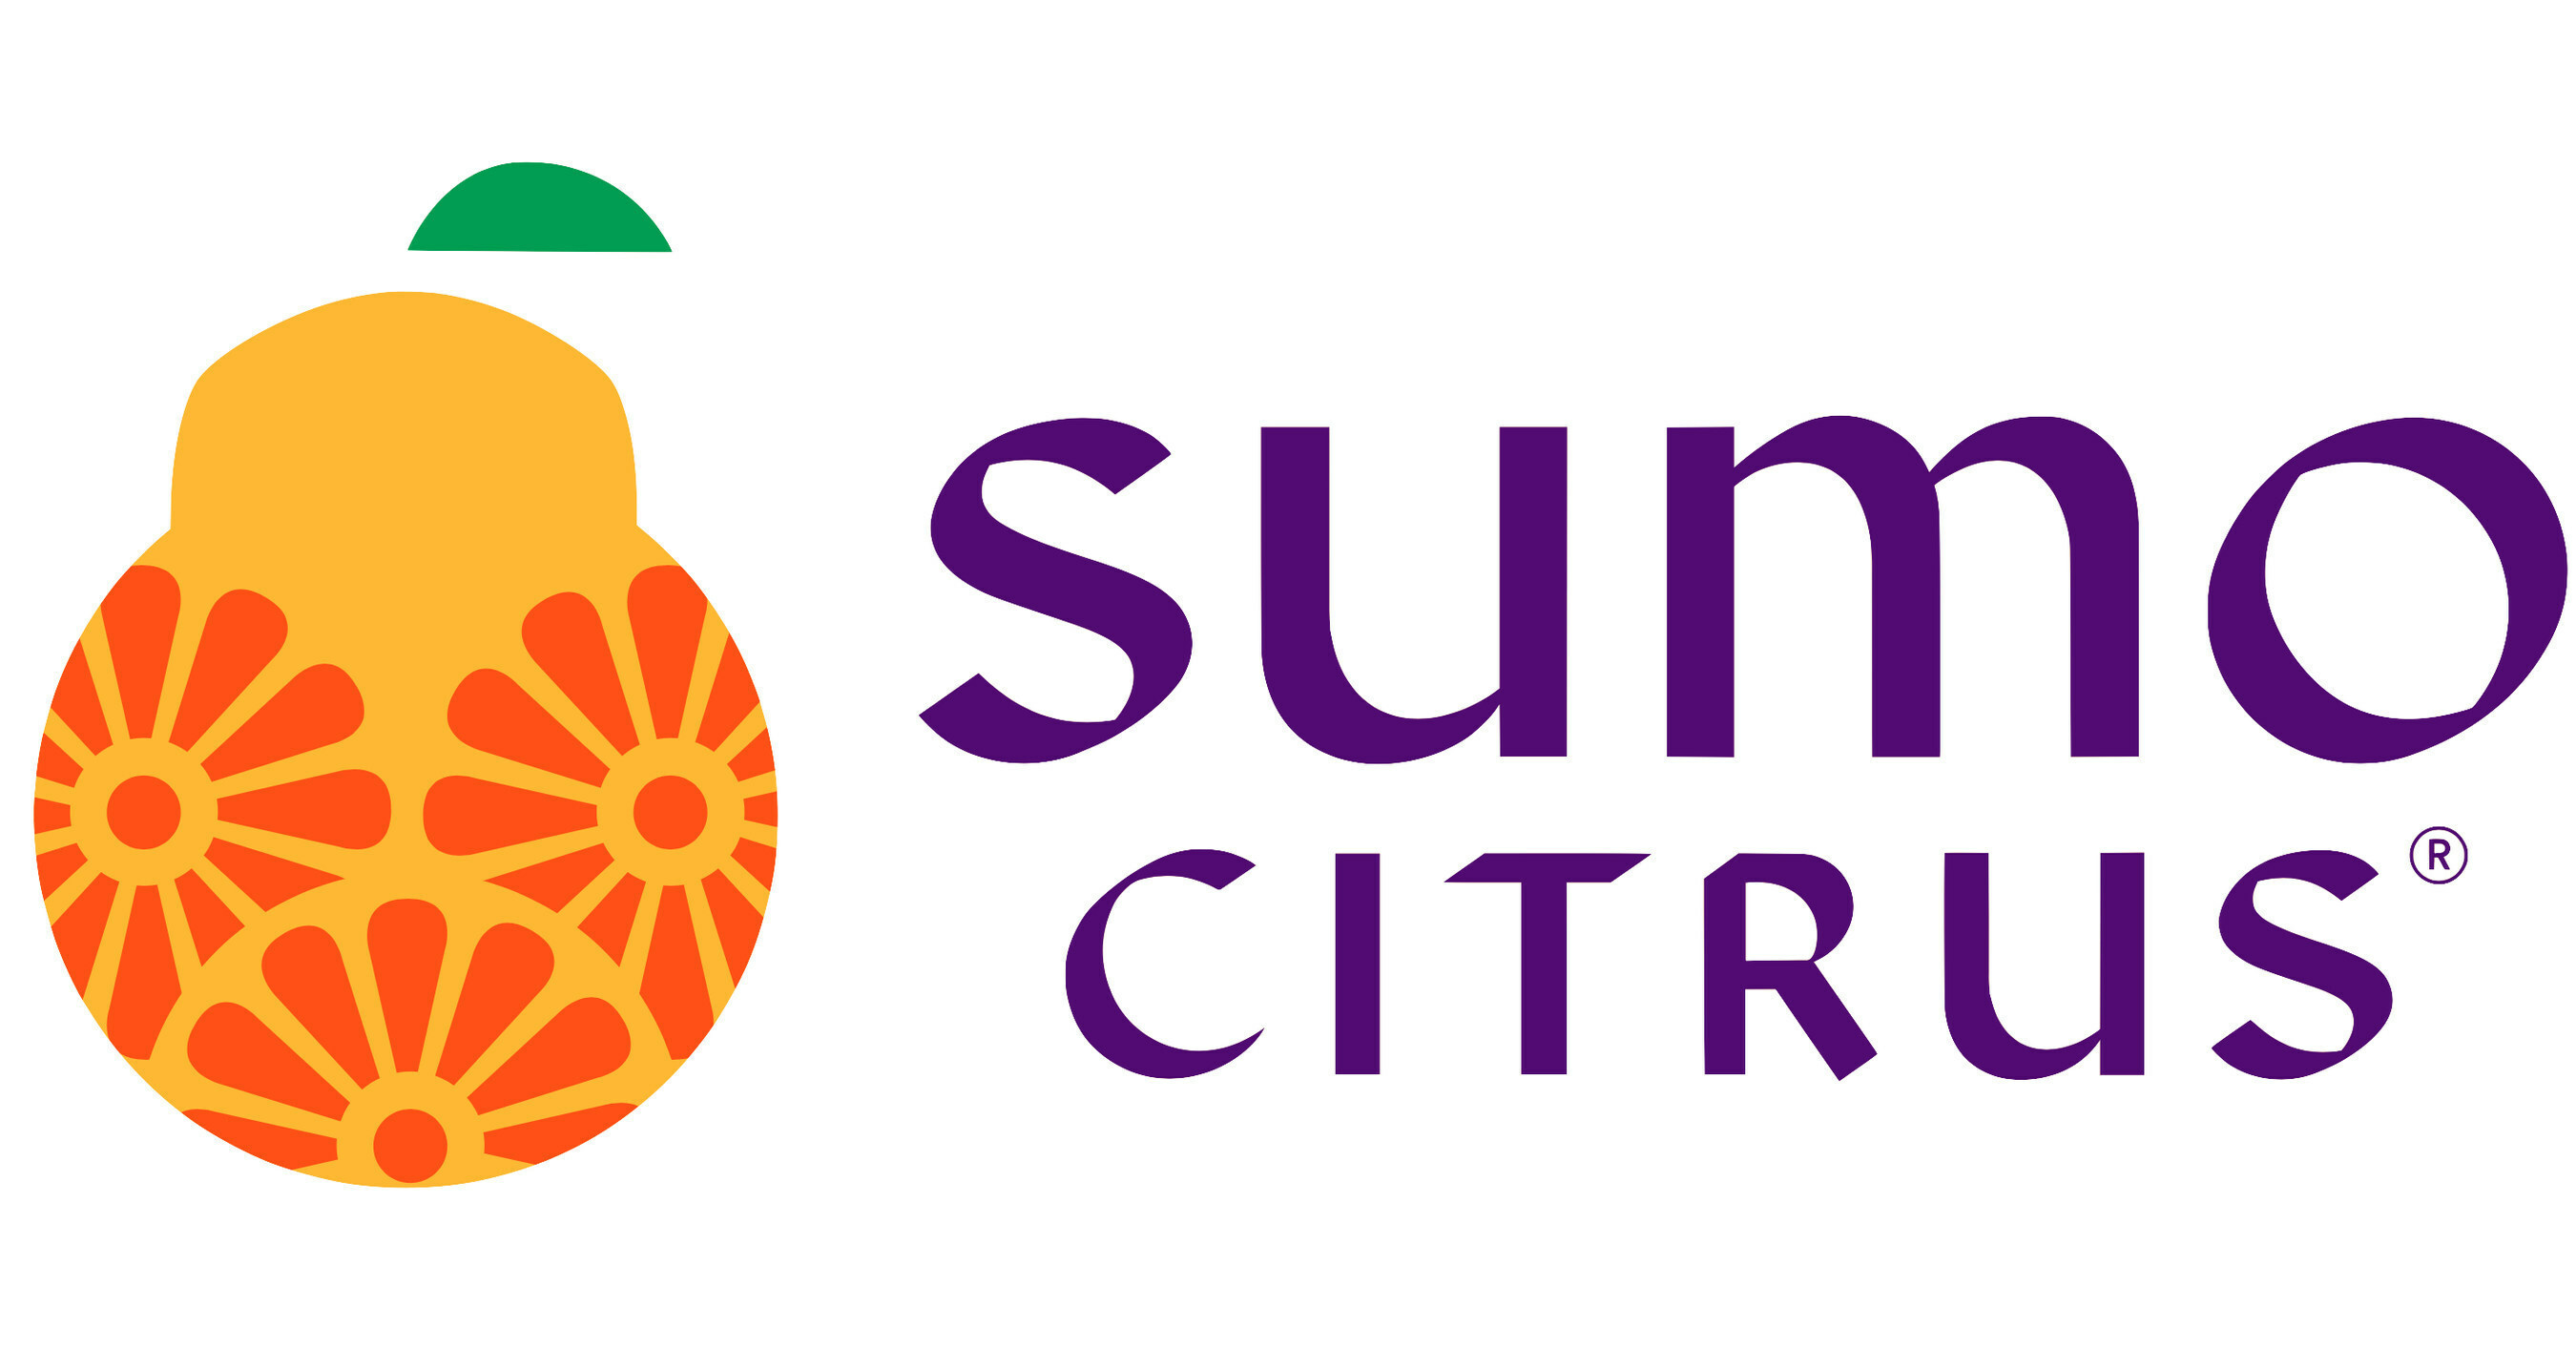 In season: Catch the sweet, short season of Sumo oranges